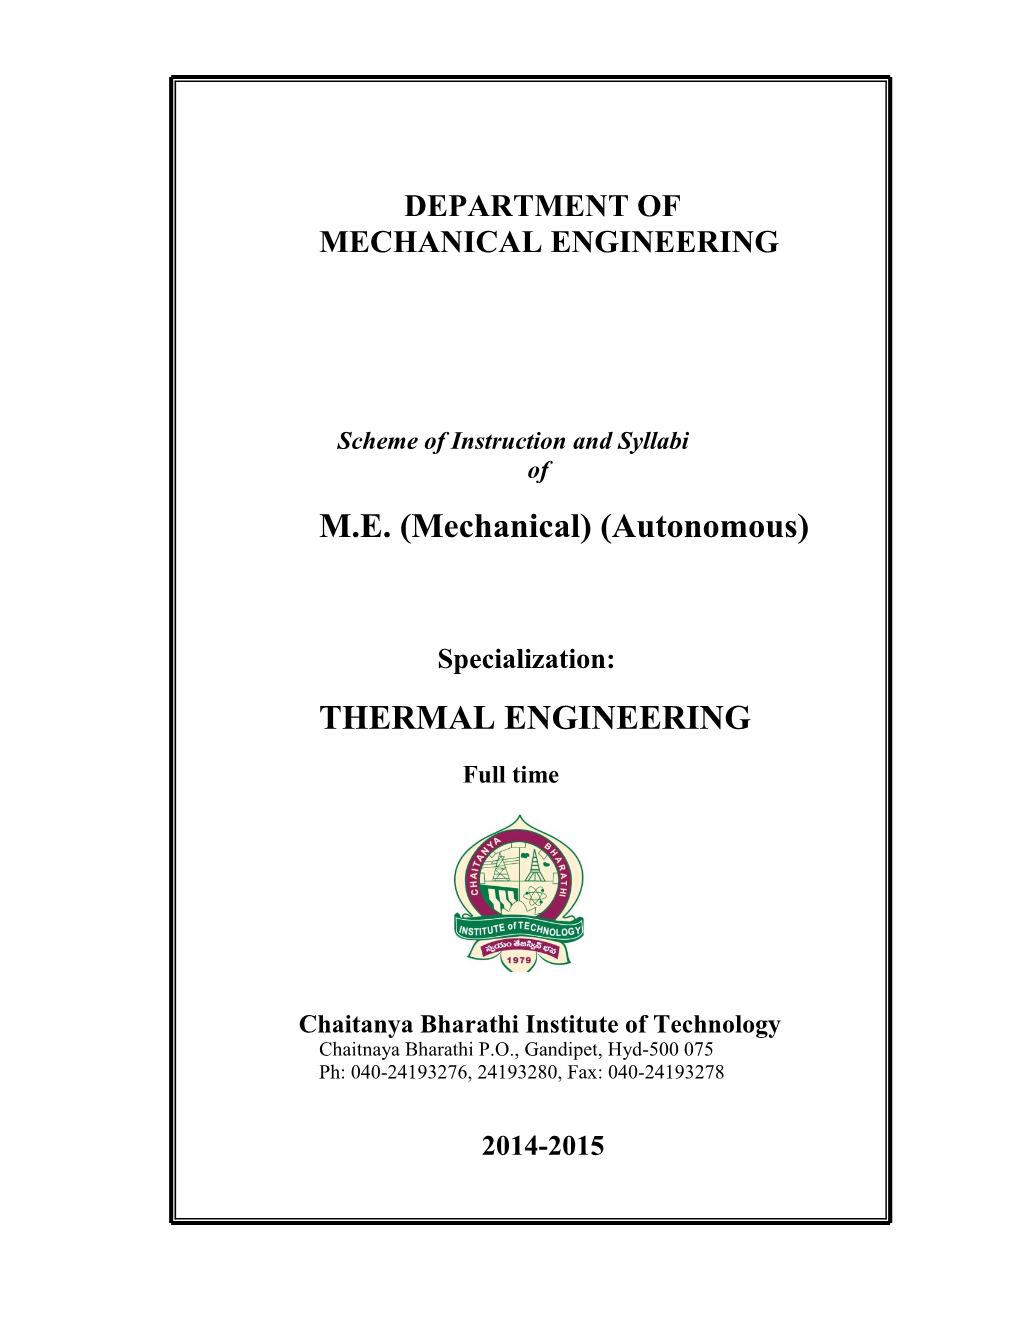 M.E. (Mechanical) (Autonomous) THERMAL ENGINEERING